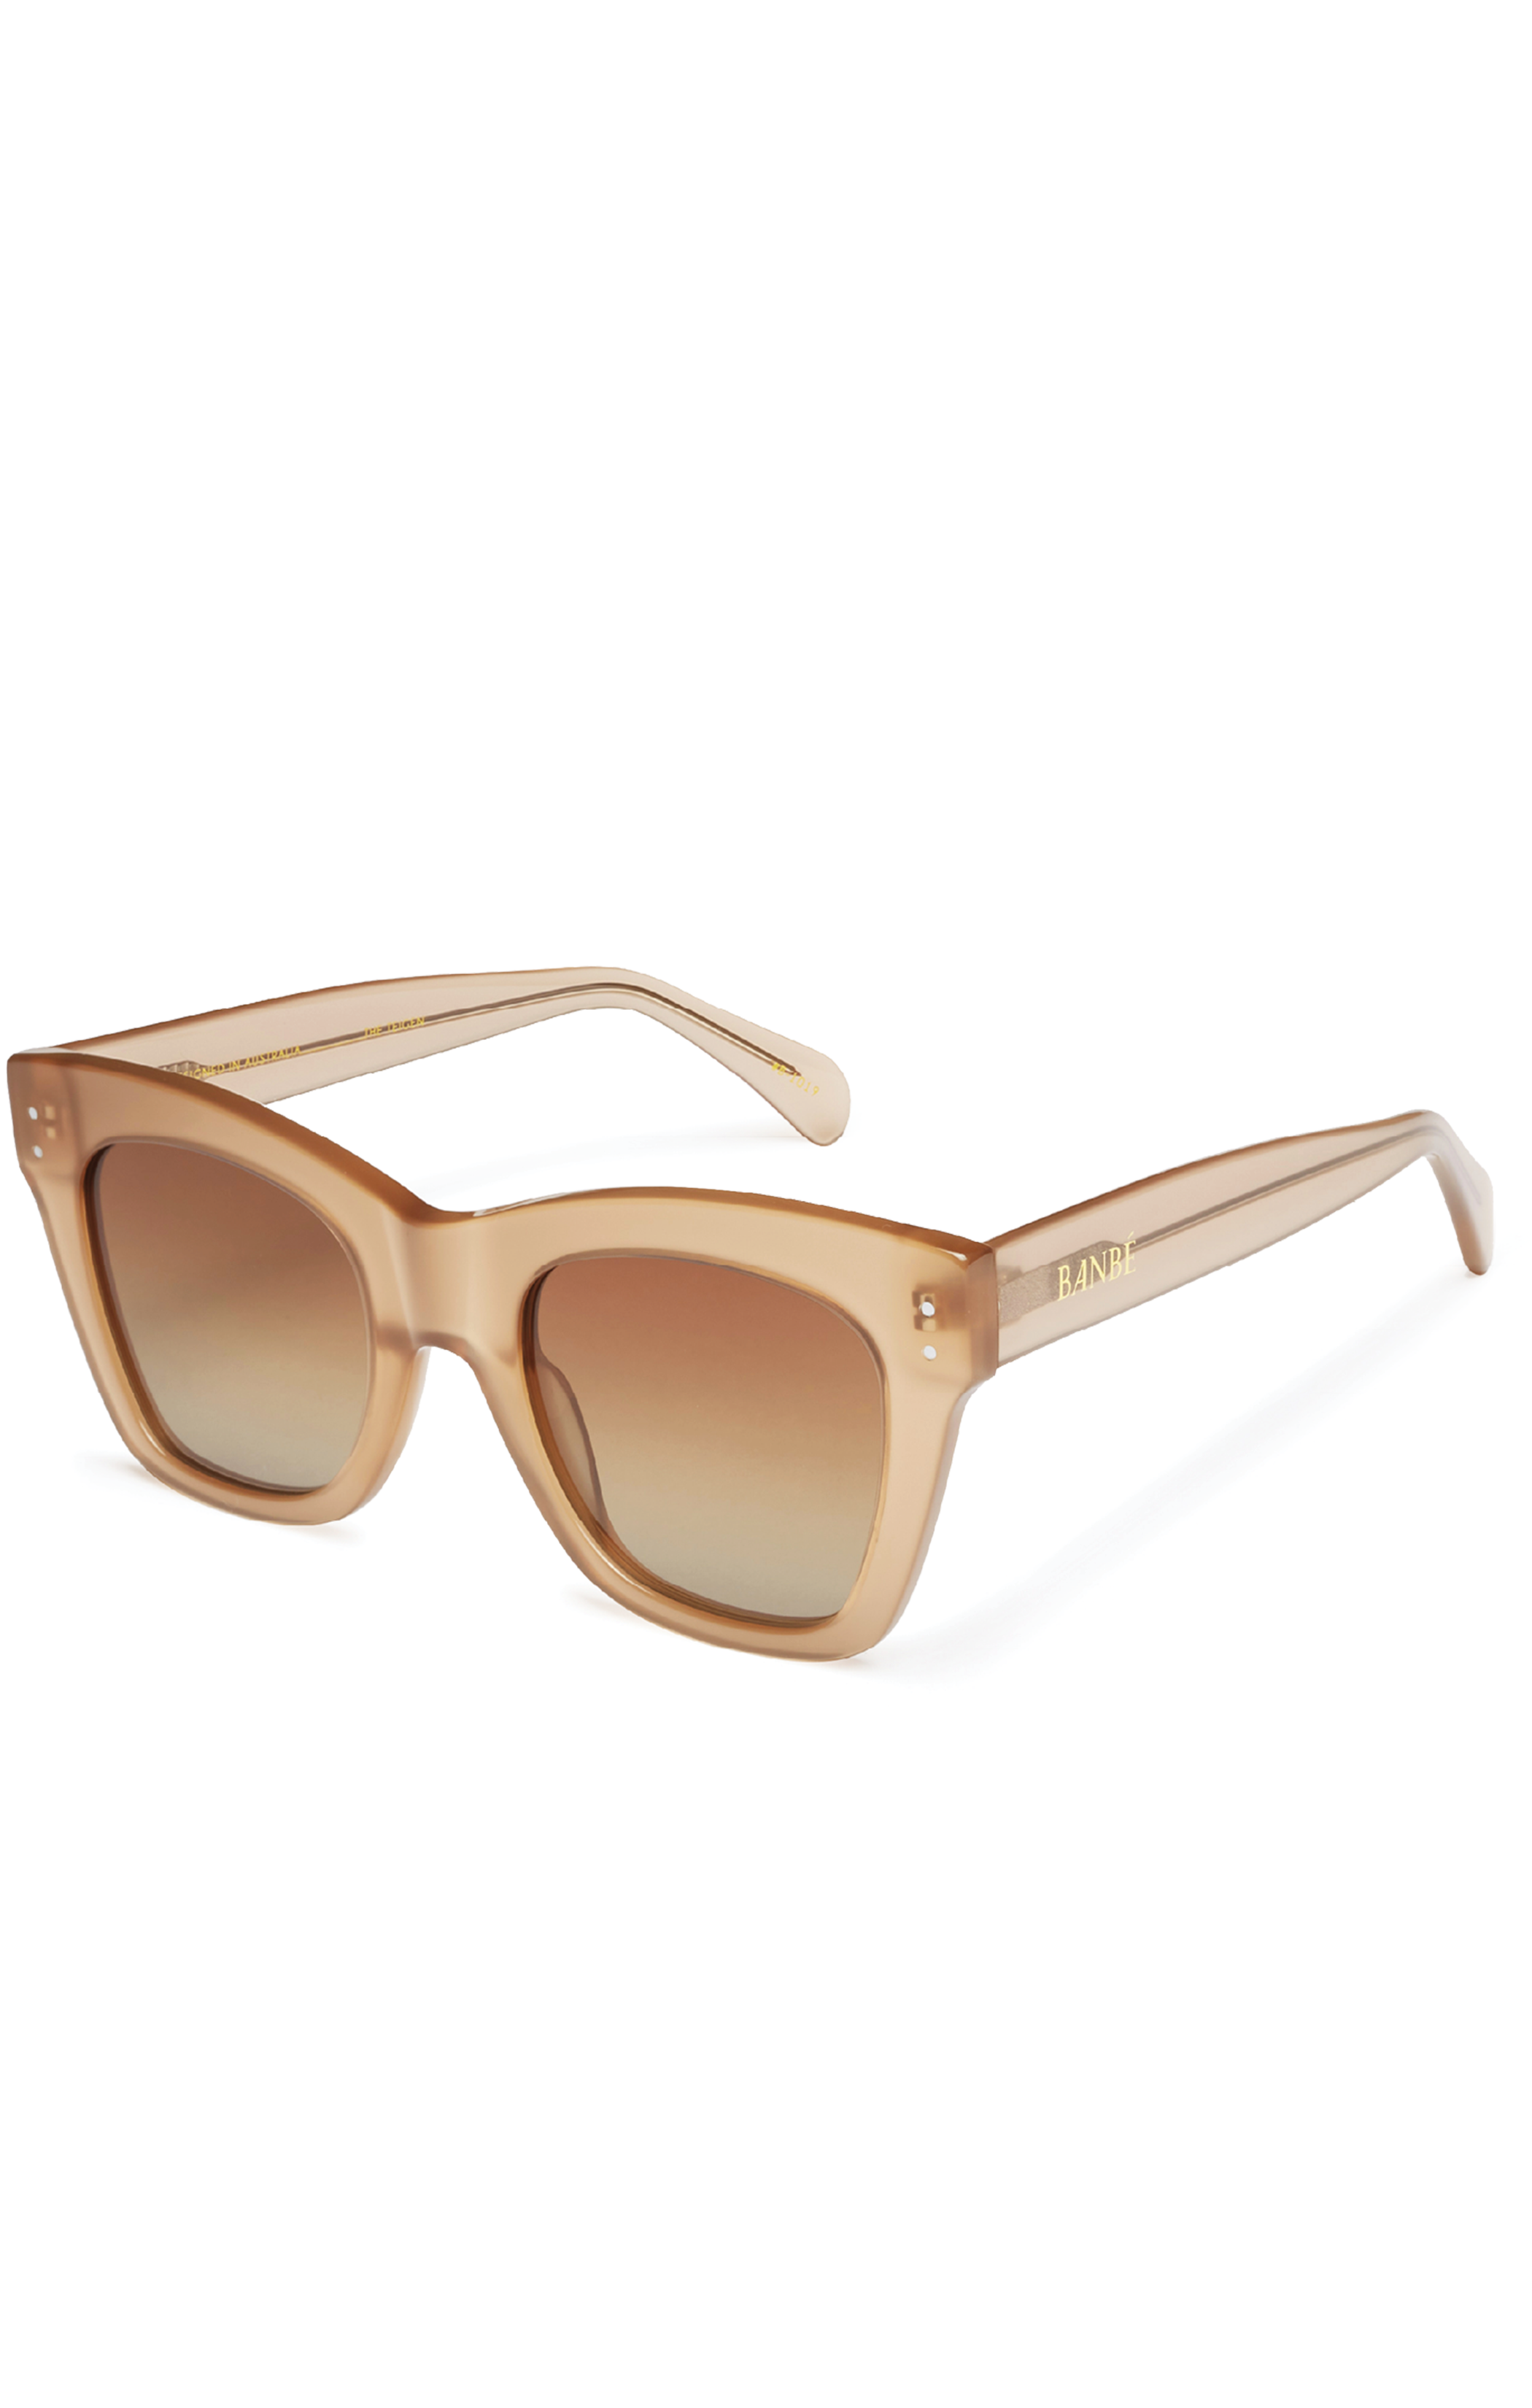 Banbè Eyewear The Teigen Sunglasses ~ Amber Fade